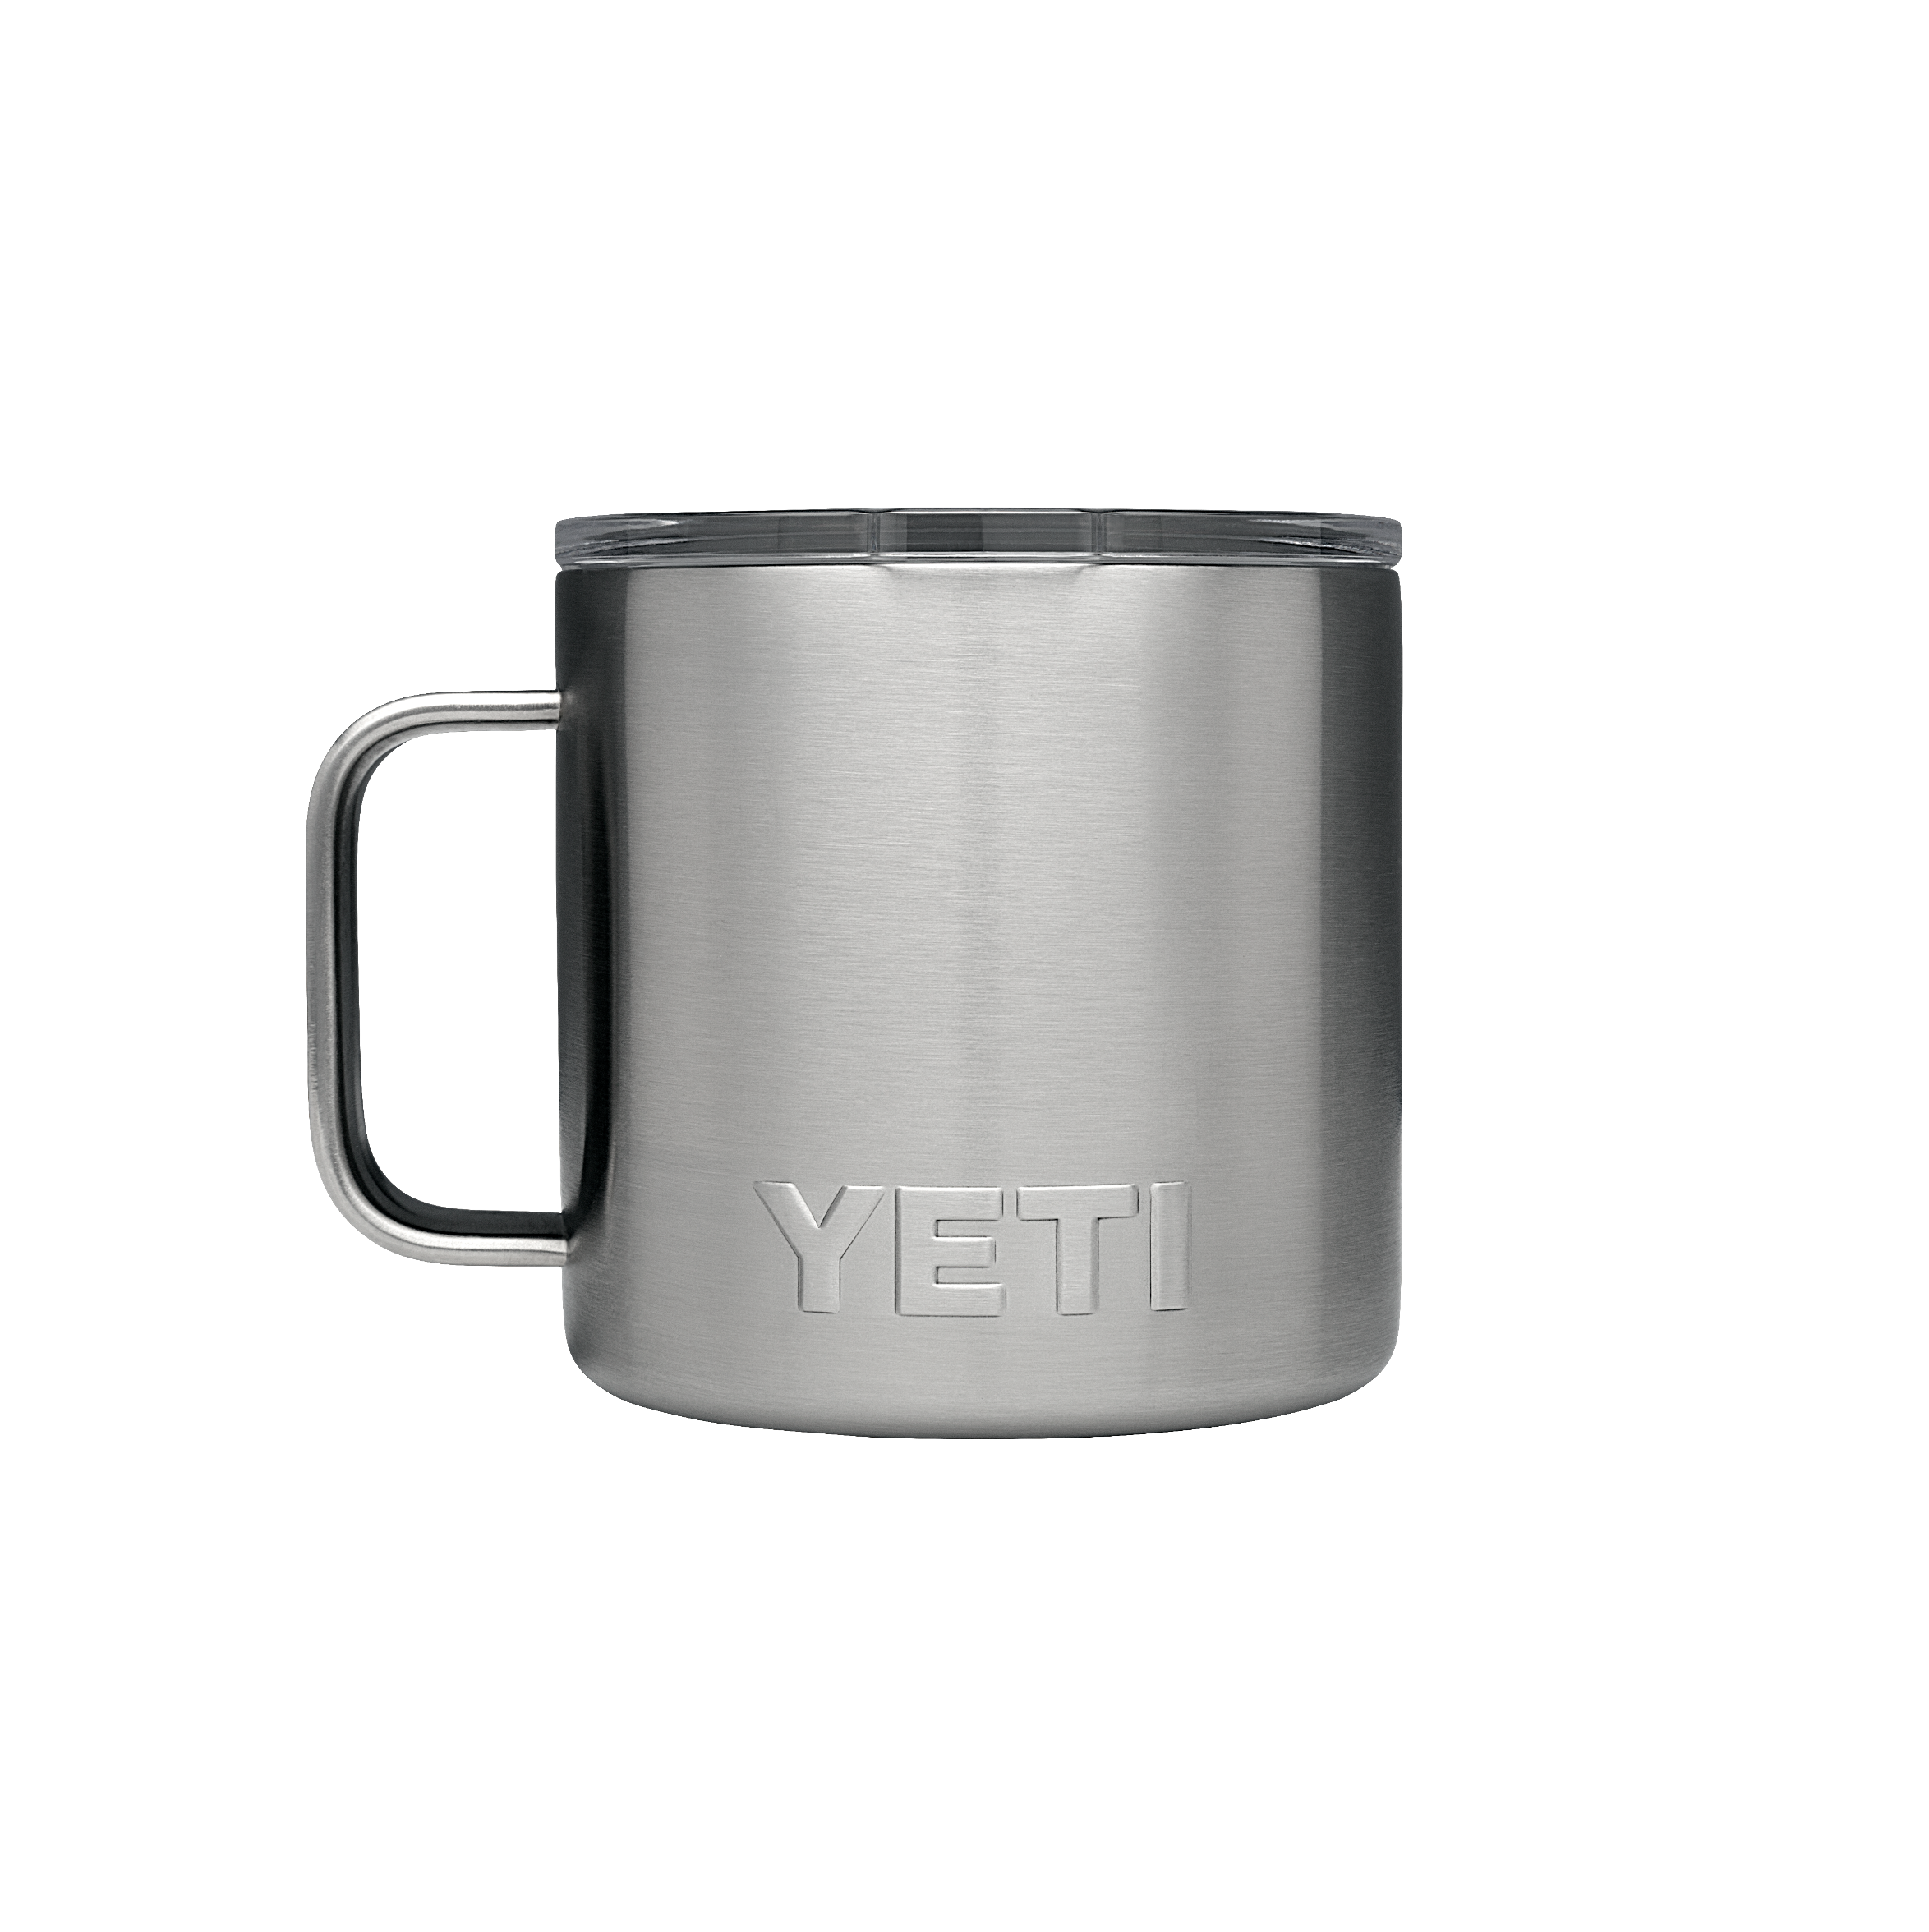 yeti-stainless-steel-14oz-mug